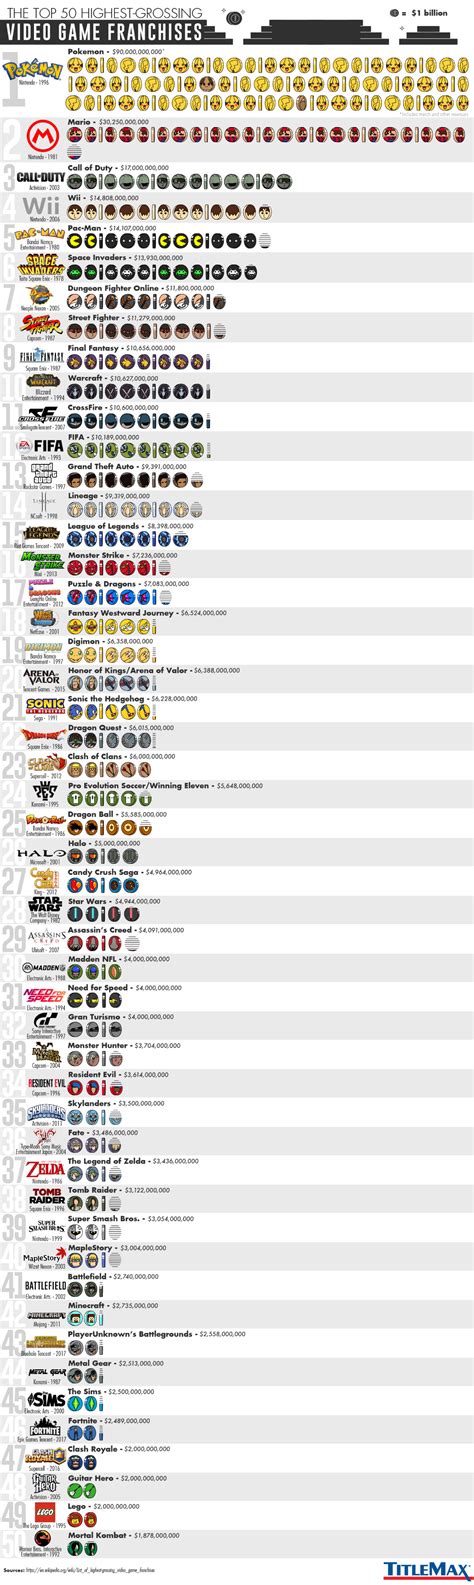 infographic   biggest video game franchises  total revenue